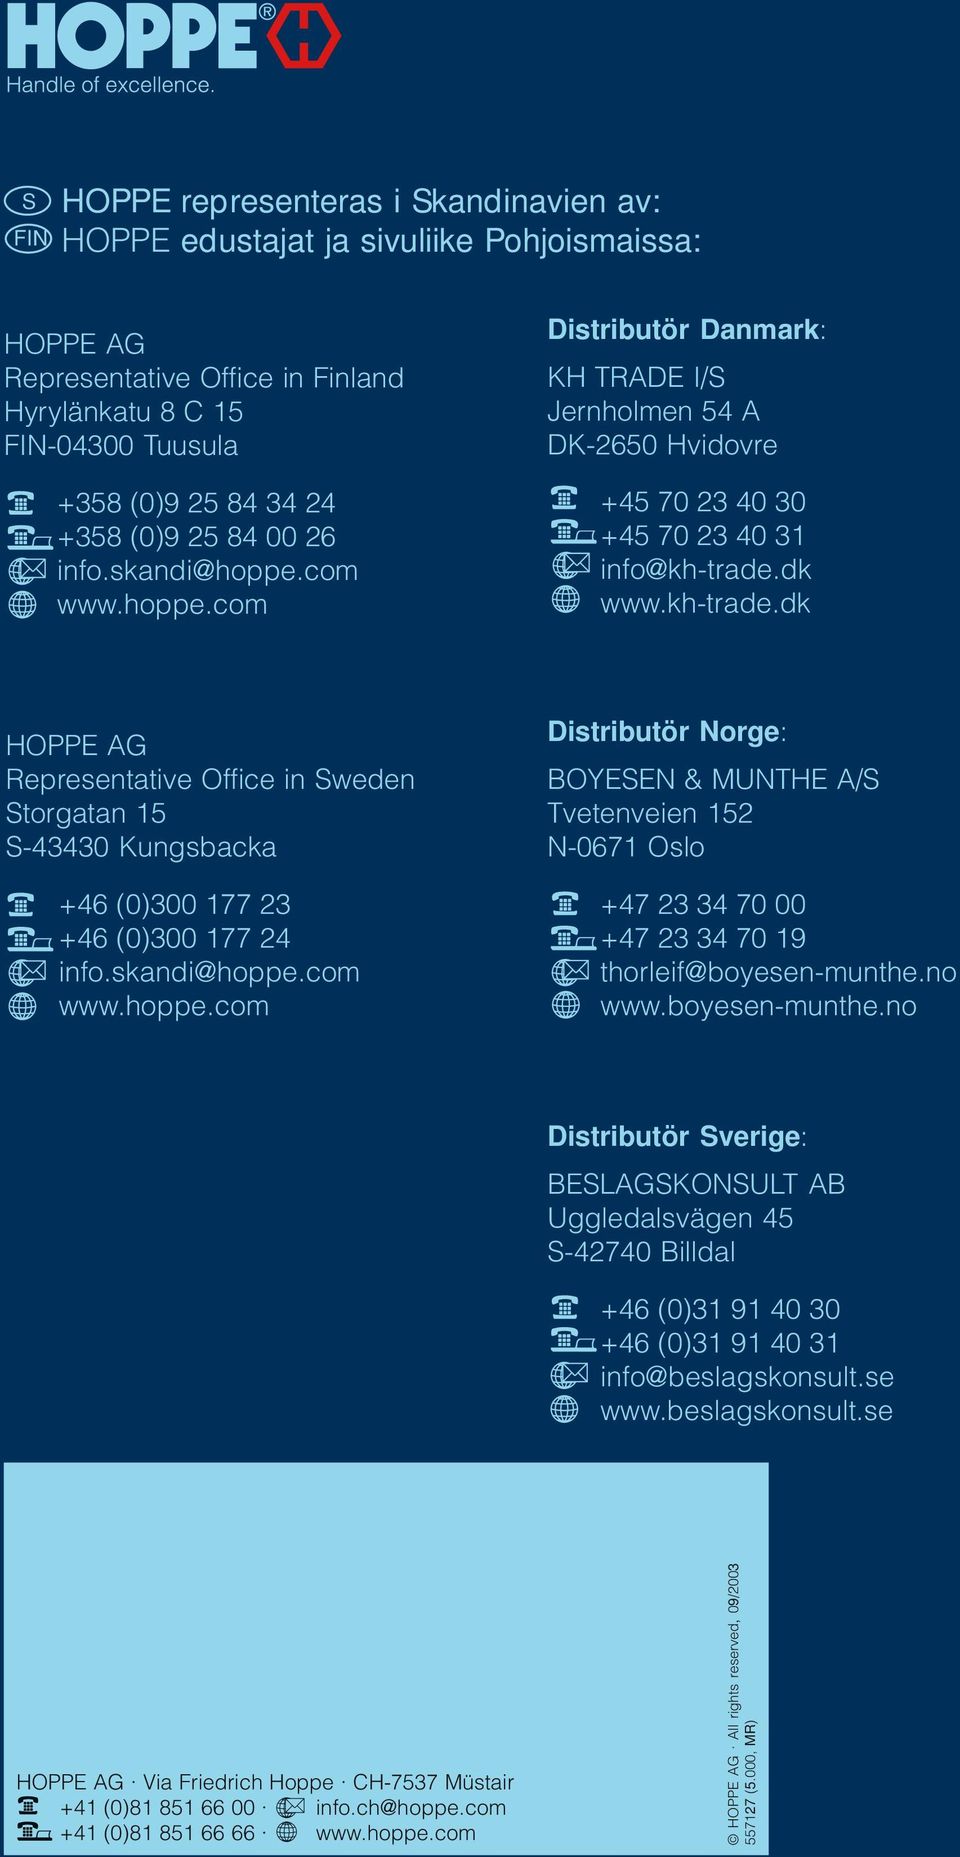 dk www.kh-trade.dk HOPPE AG Representative Office in Sweden Storgatan 15 S-43430 Kungsbacka +46 (0)300 177 23 +46 (0)300 177 24 info.skandi@hoppe.